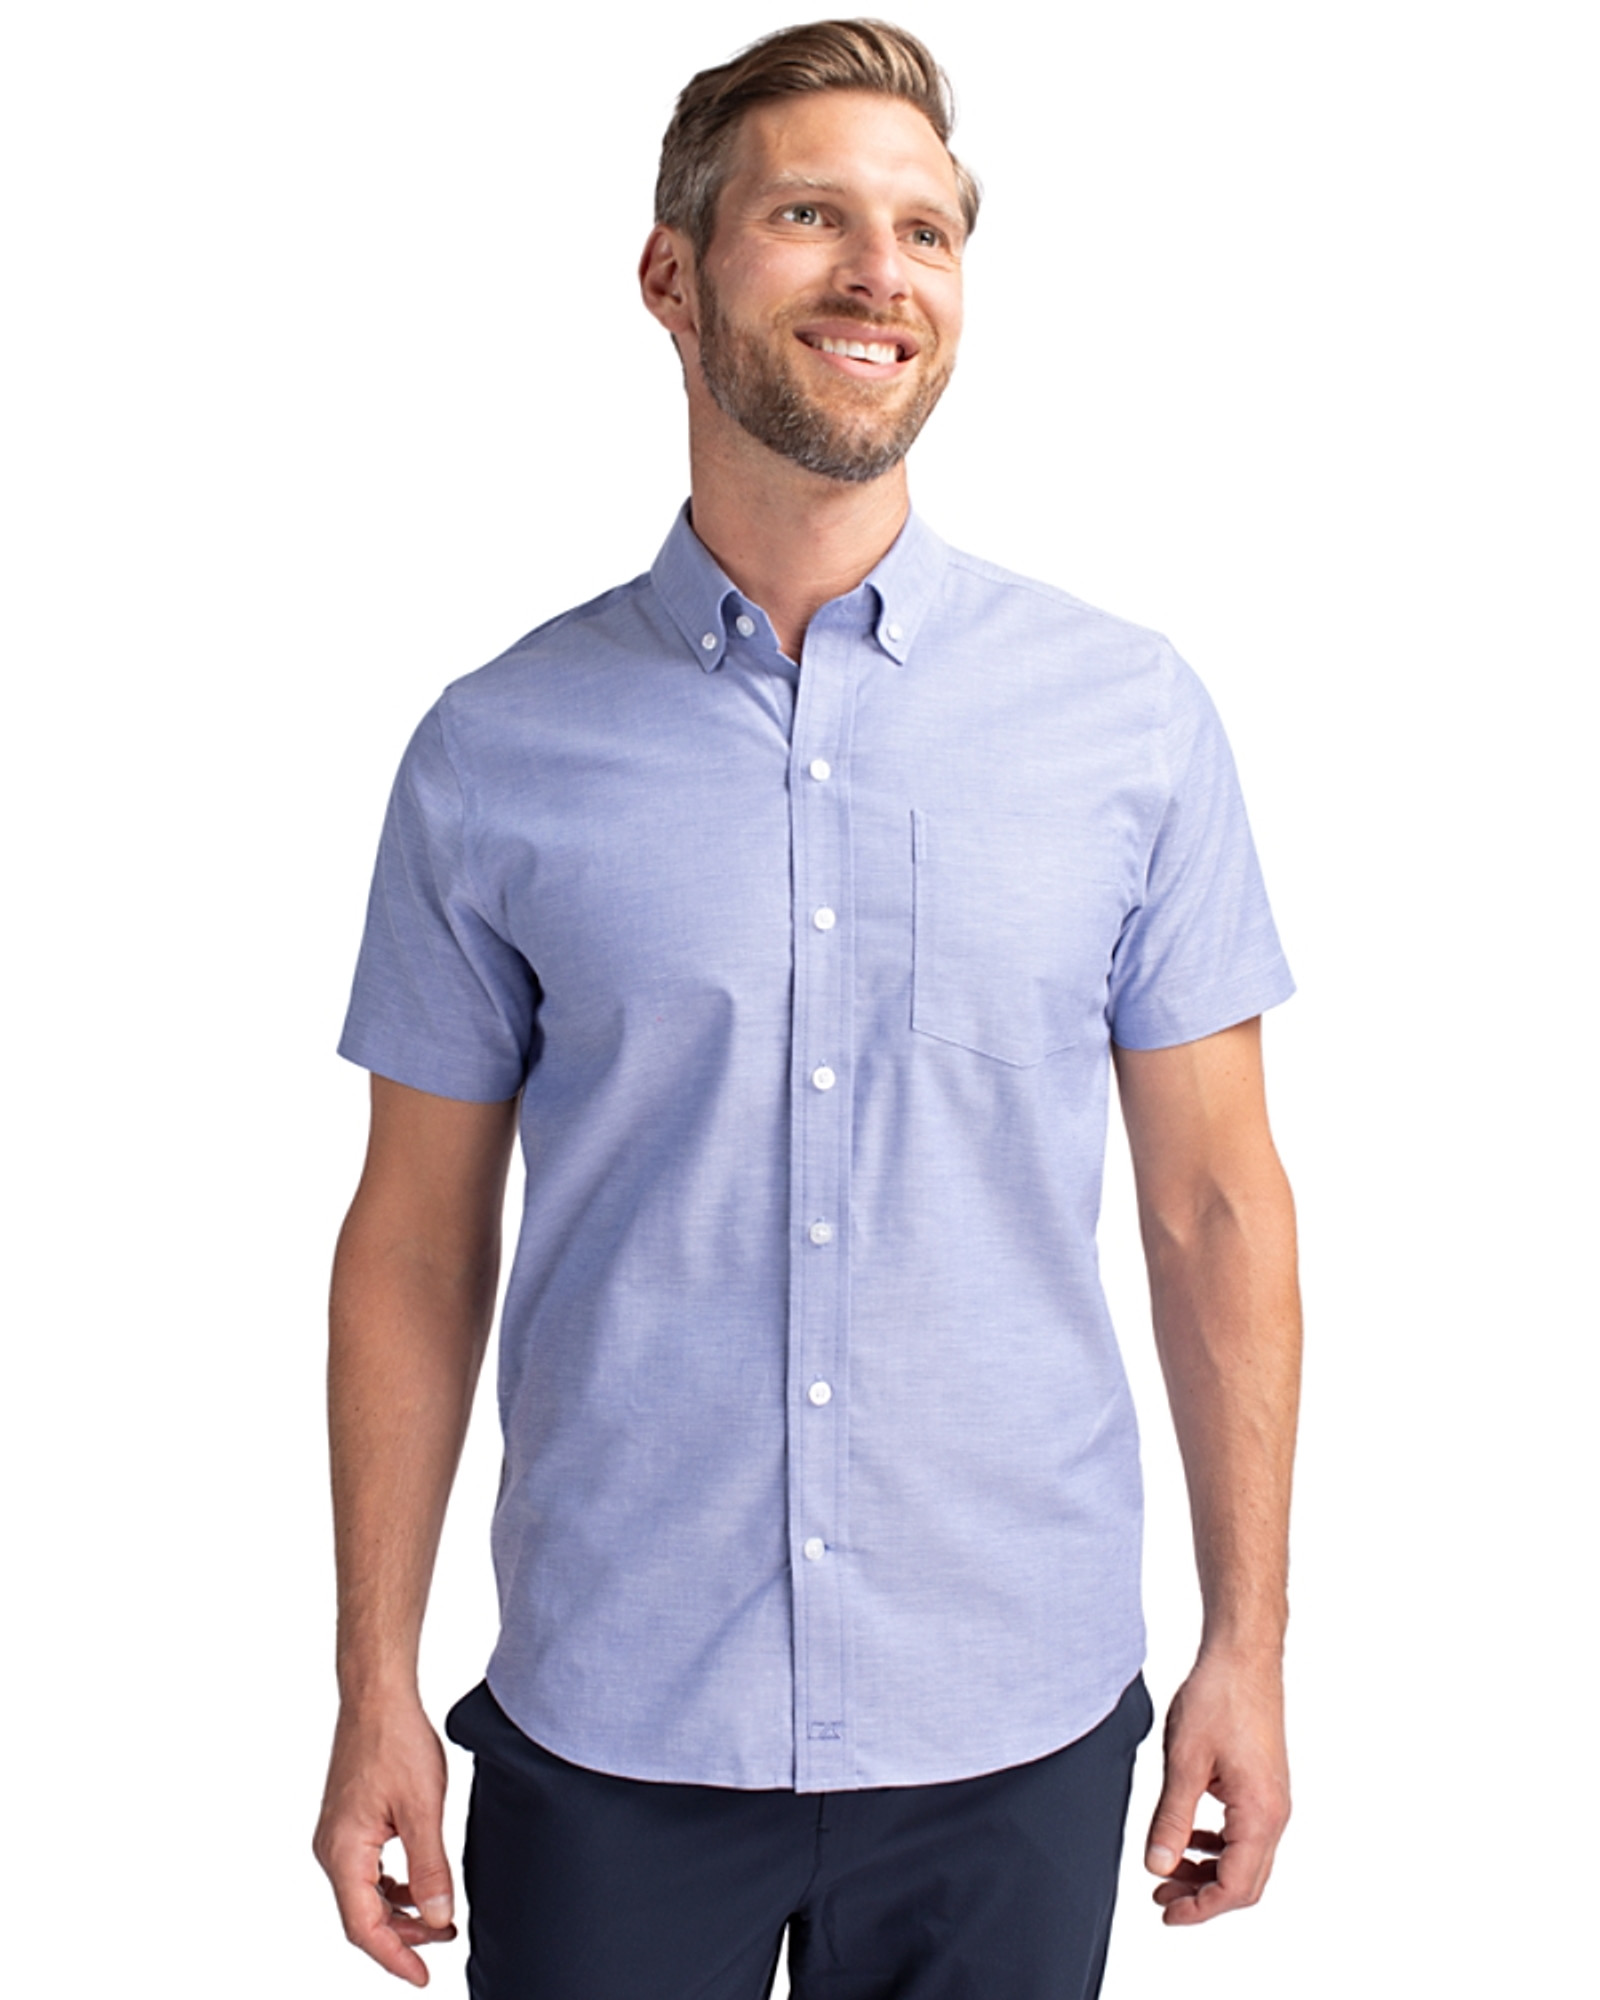 Men's Short Sleeves, Shirts